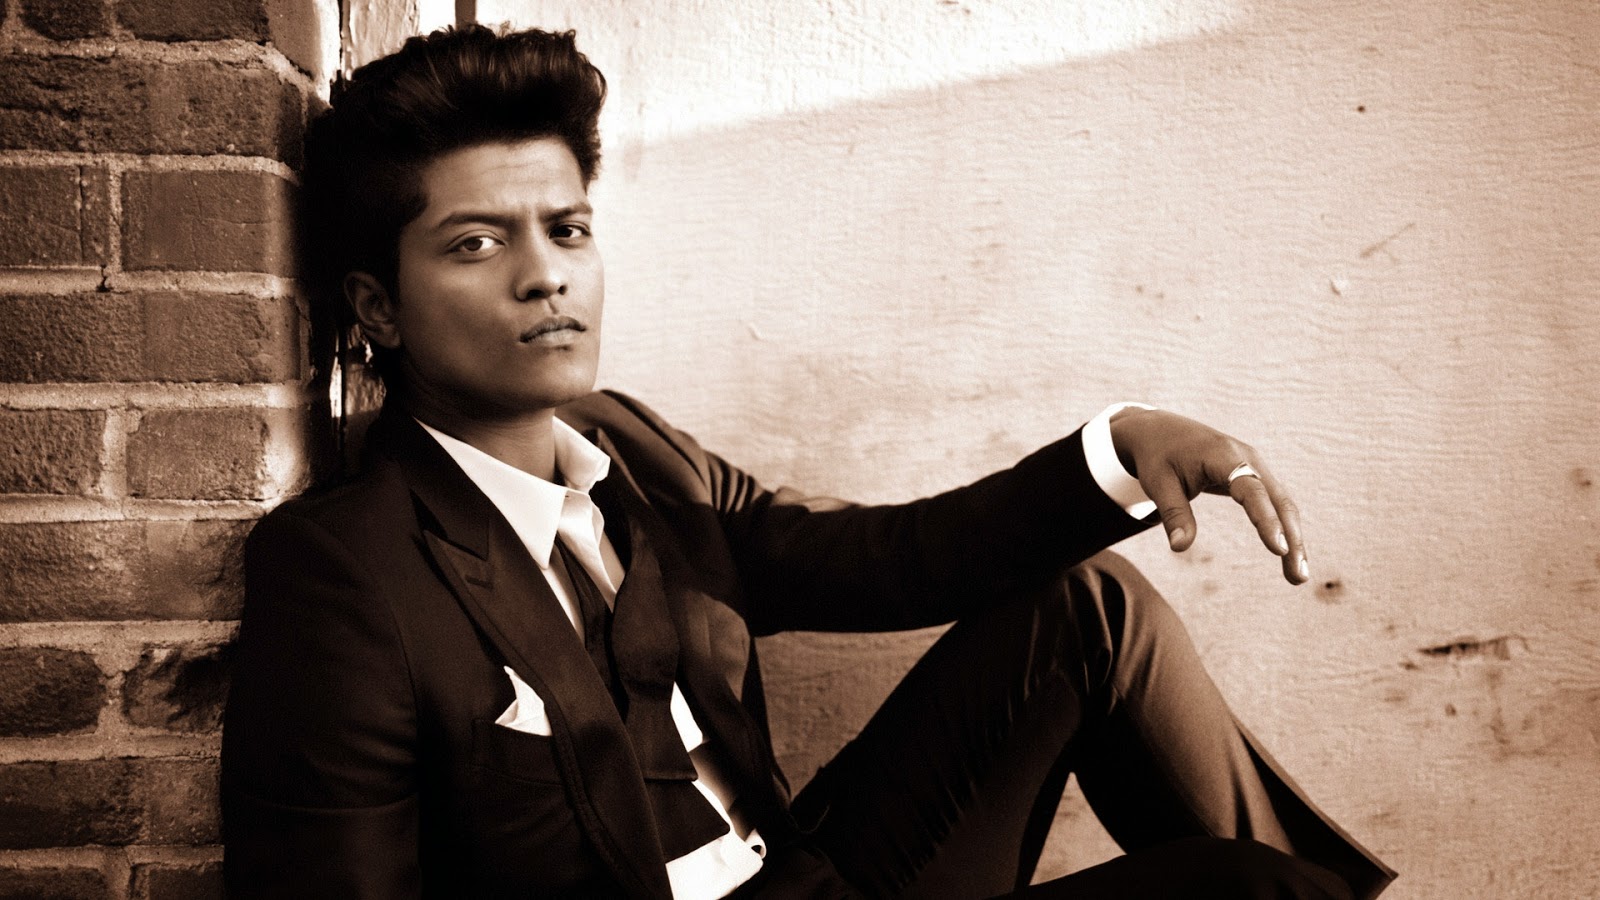 Bruno Mars. Nuevo álbum este año. Jamareo Artis. Cúsica Plus